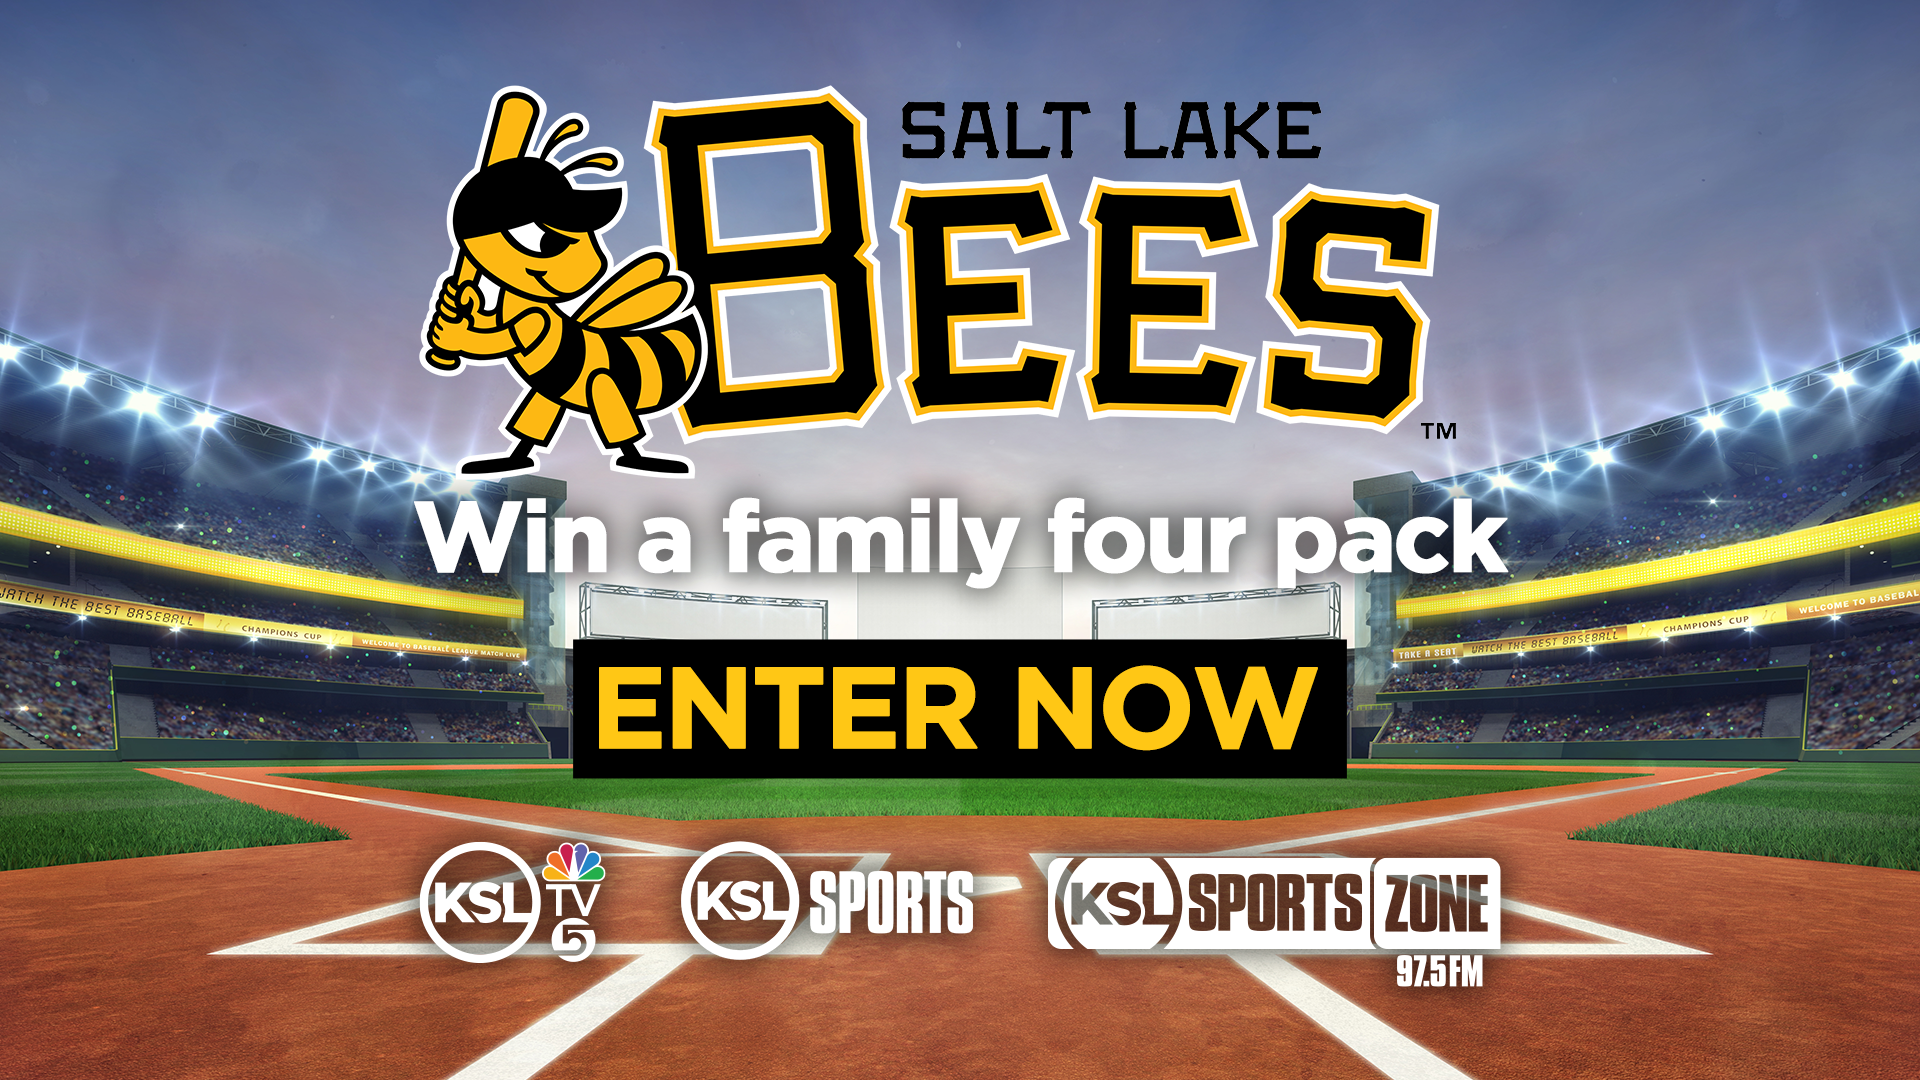 Salt Lake Bees Contest ⚾